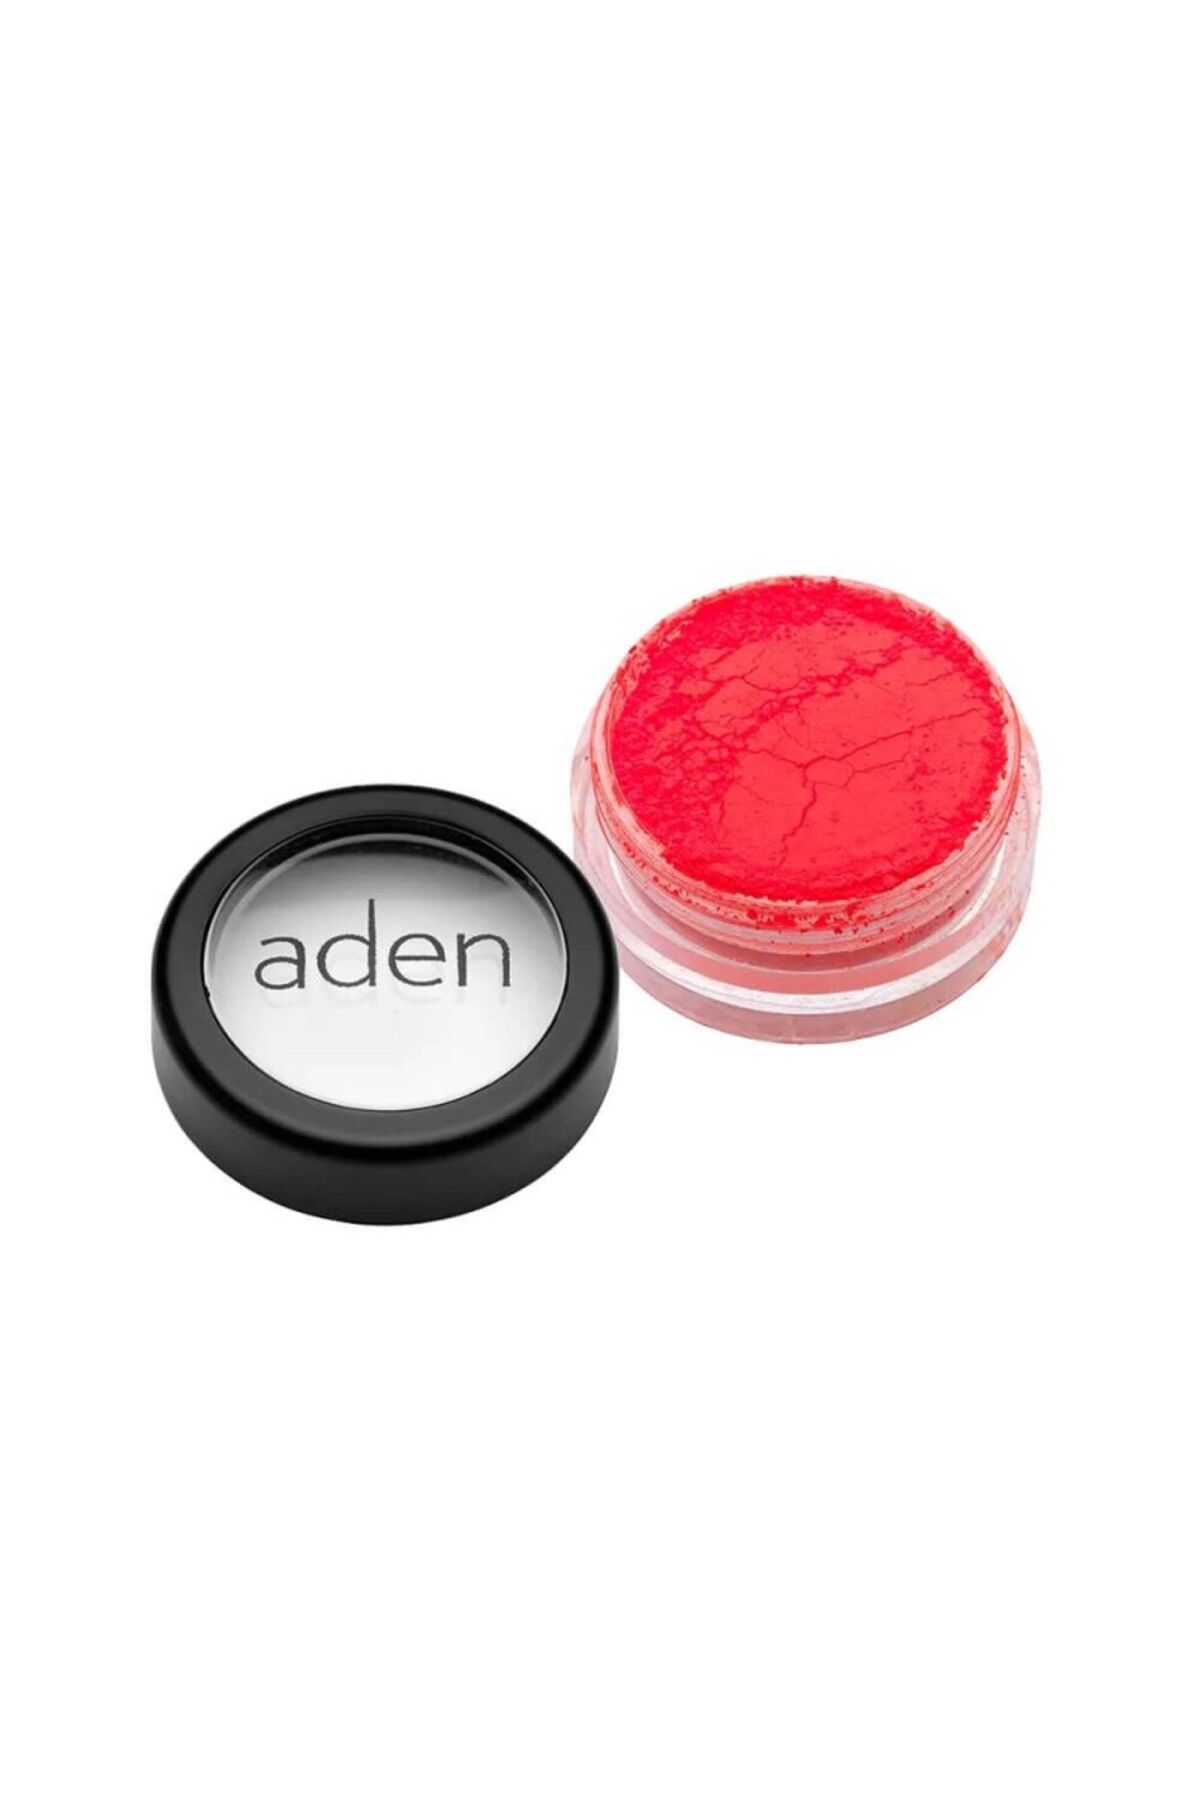 Aden Pigment Powder ( 39 Neon Vivid Red )